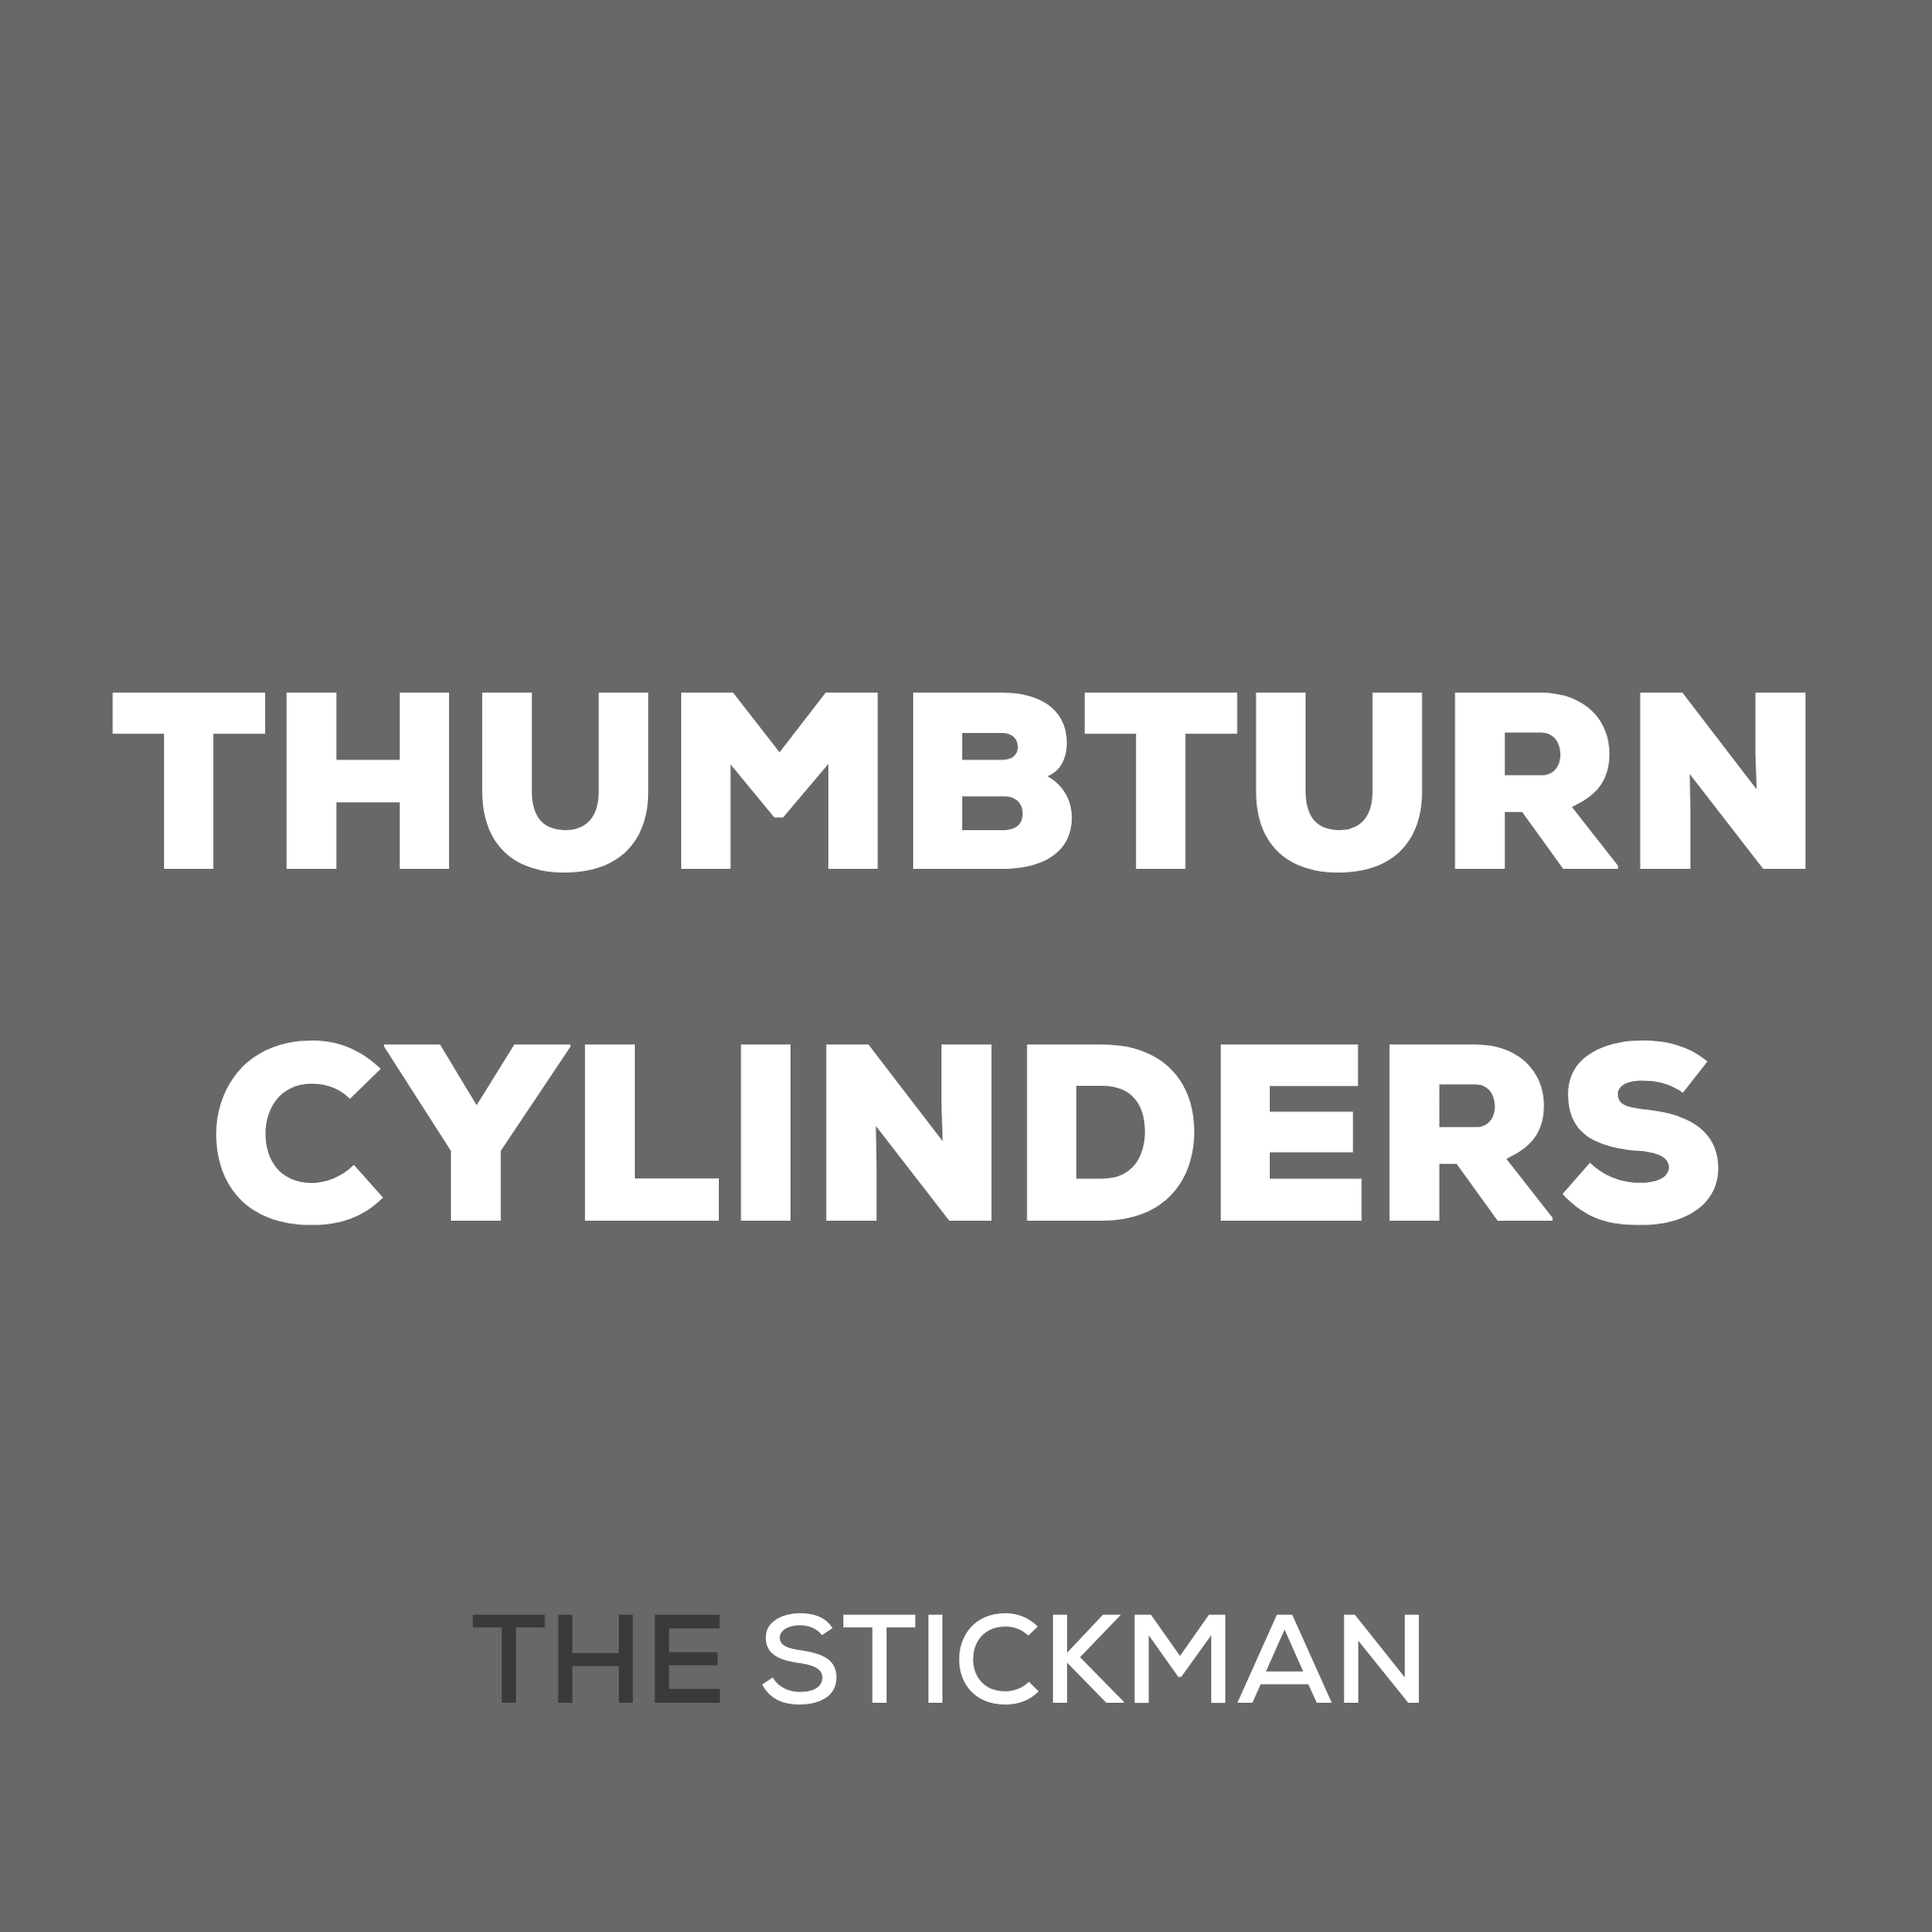 Thumbturn Cylinders